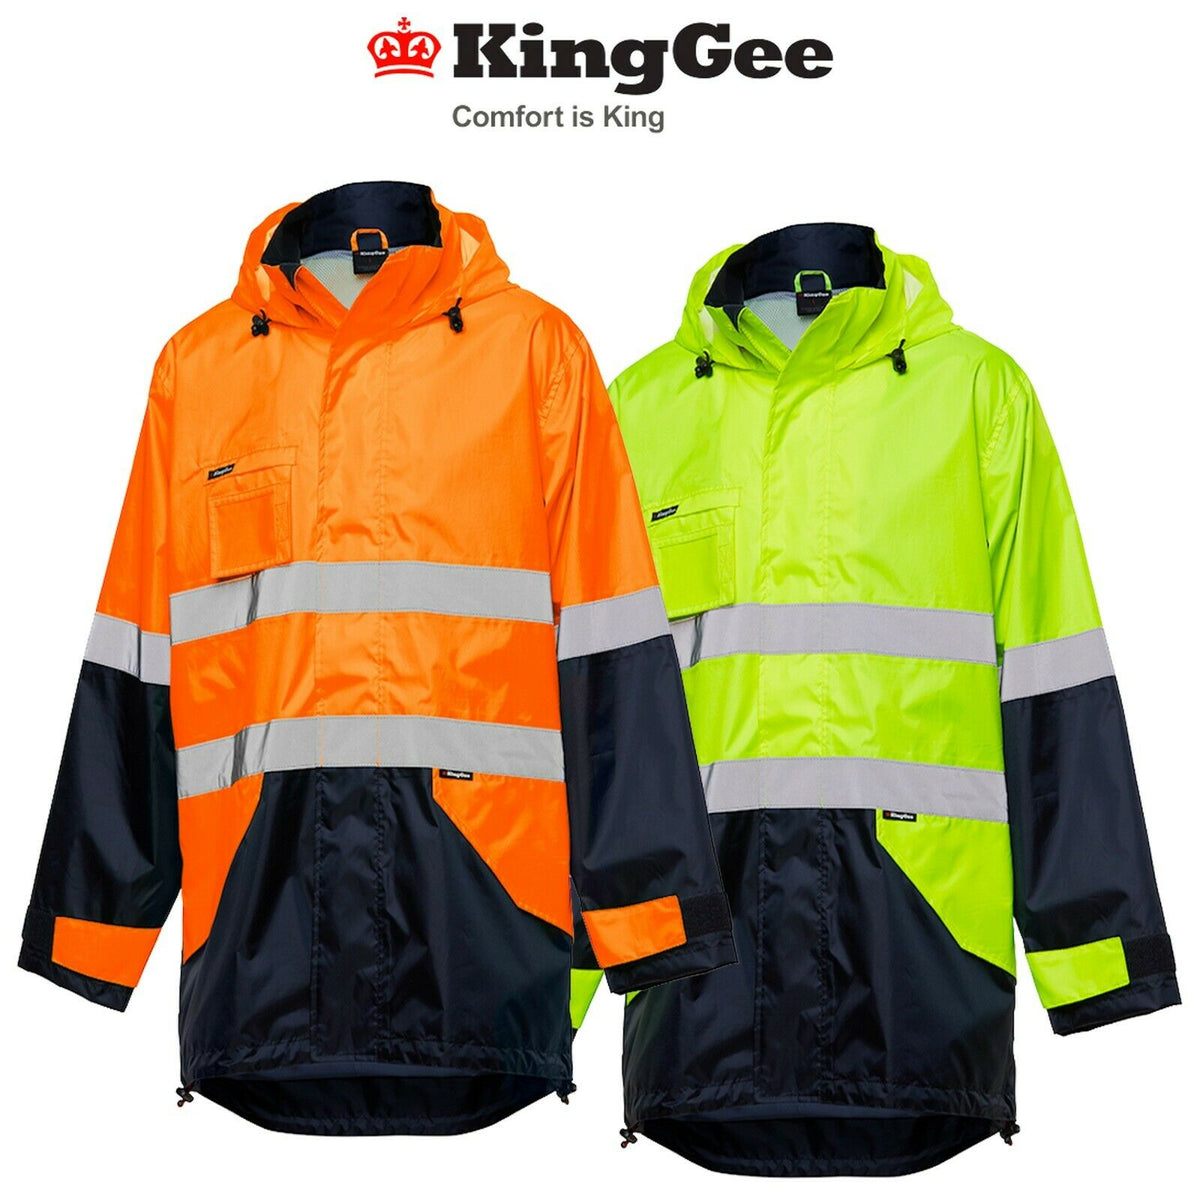 KingGee Lightweight Spray Jacket Waterproof All Season Safety Hi-Vis K55200